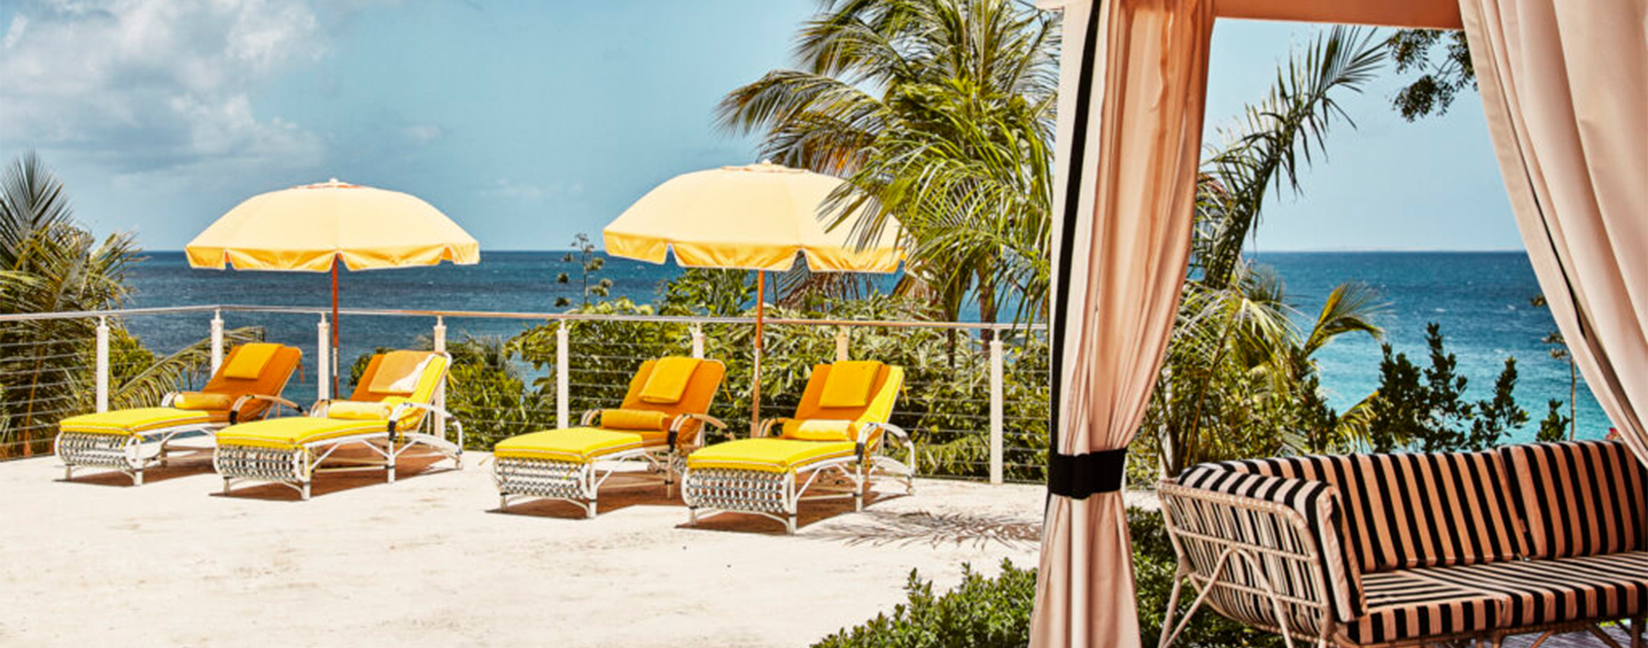 Anguilla 5 Star Resorts